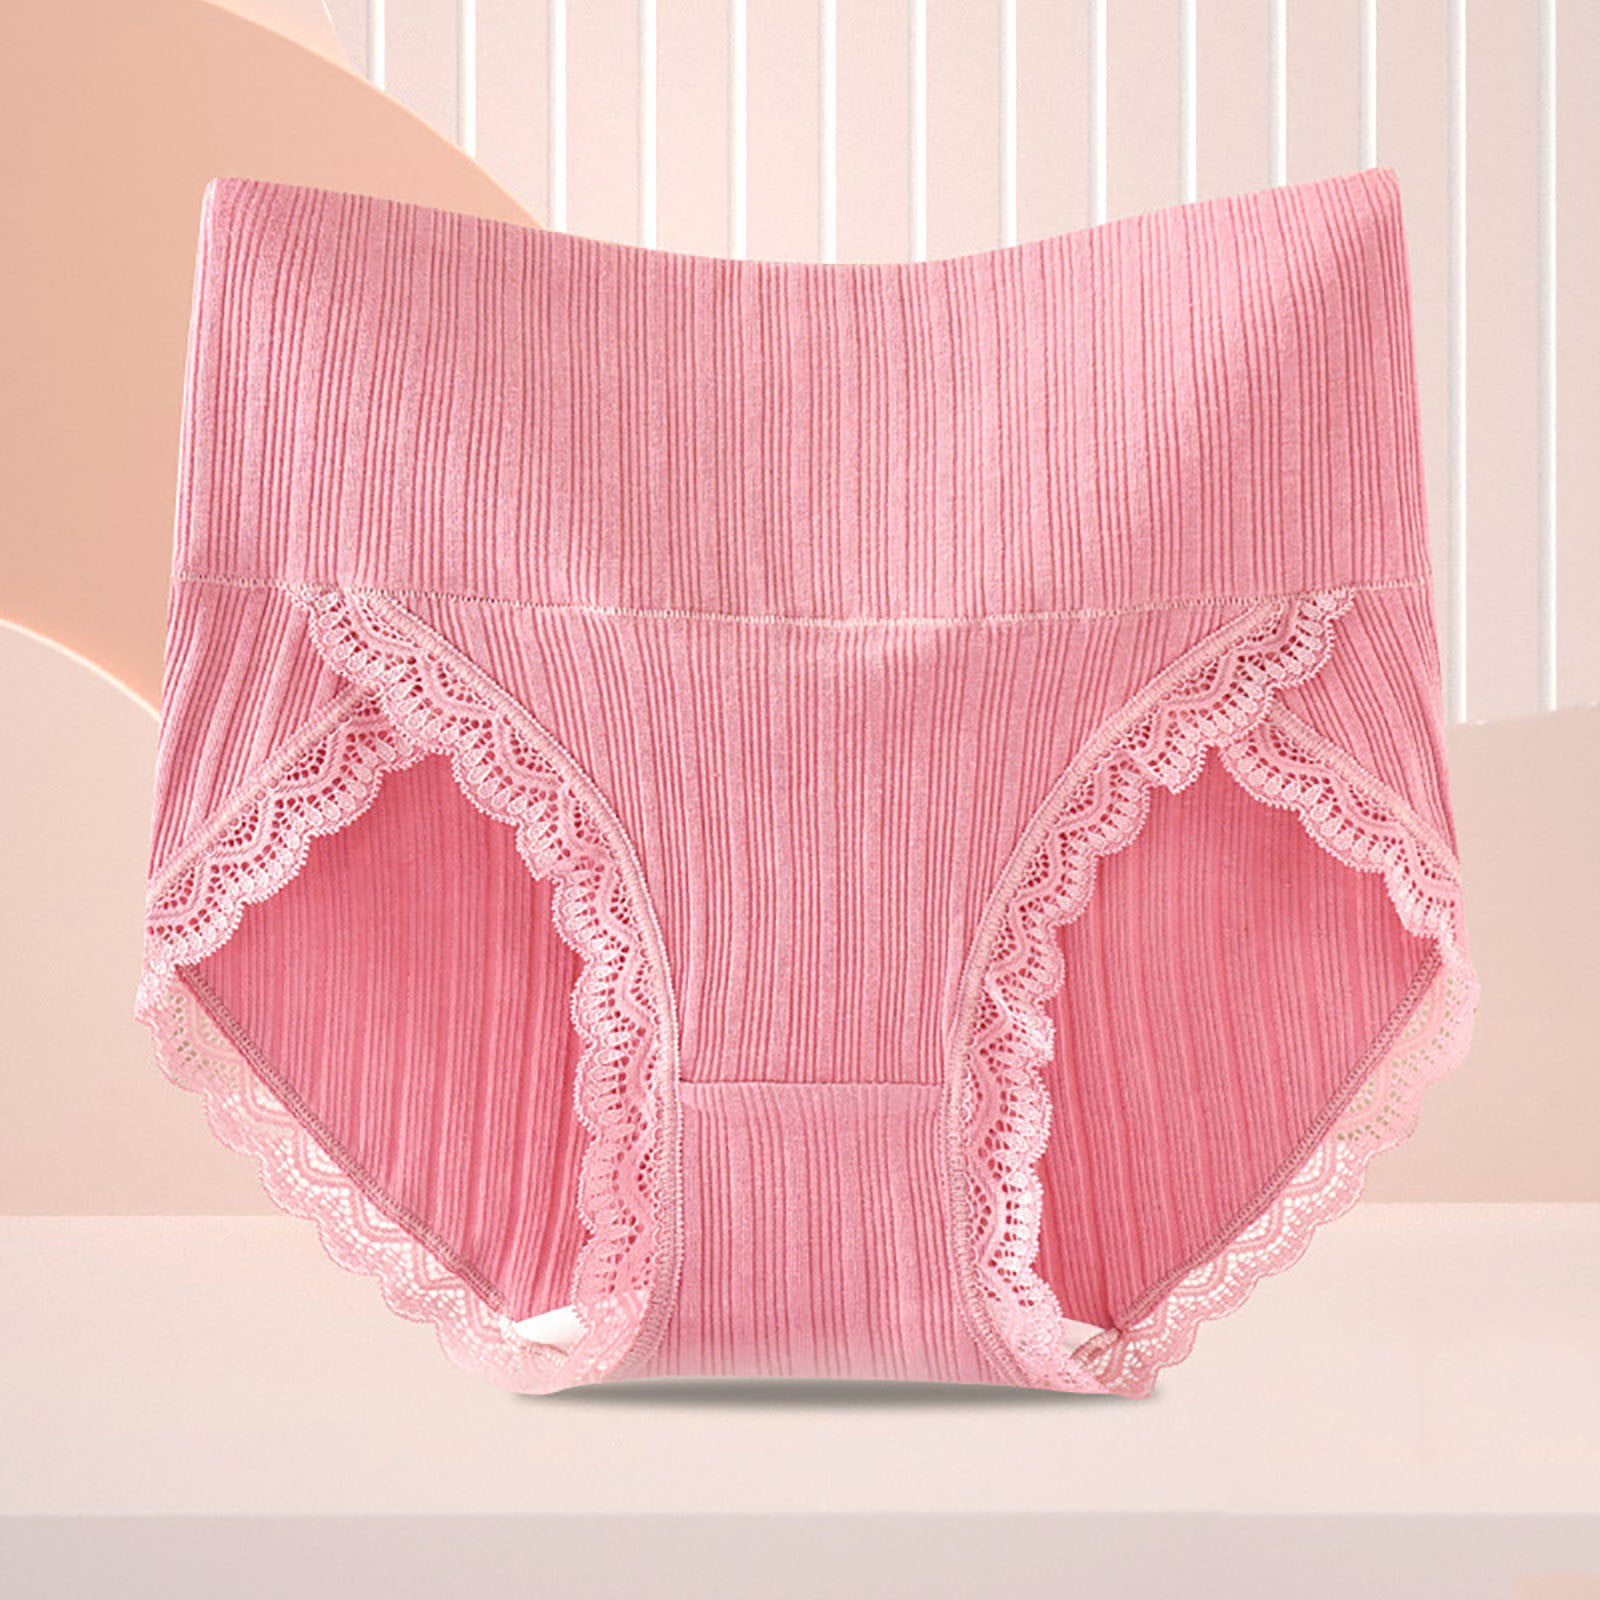 Gubotare Underpants For Women Womens High Waist Panties Womens Cotton Mesh  Transparent Abdominal Lift Briefs Charming Breathable,Pink L 